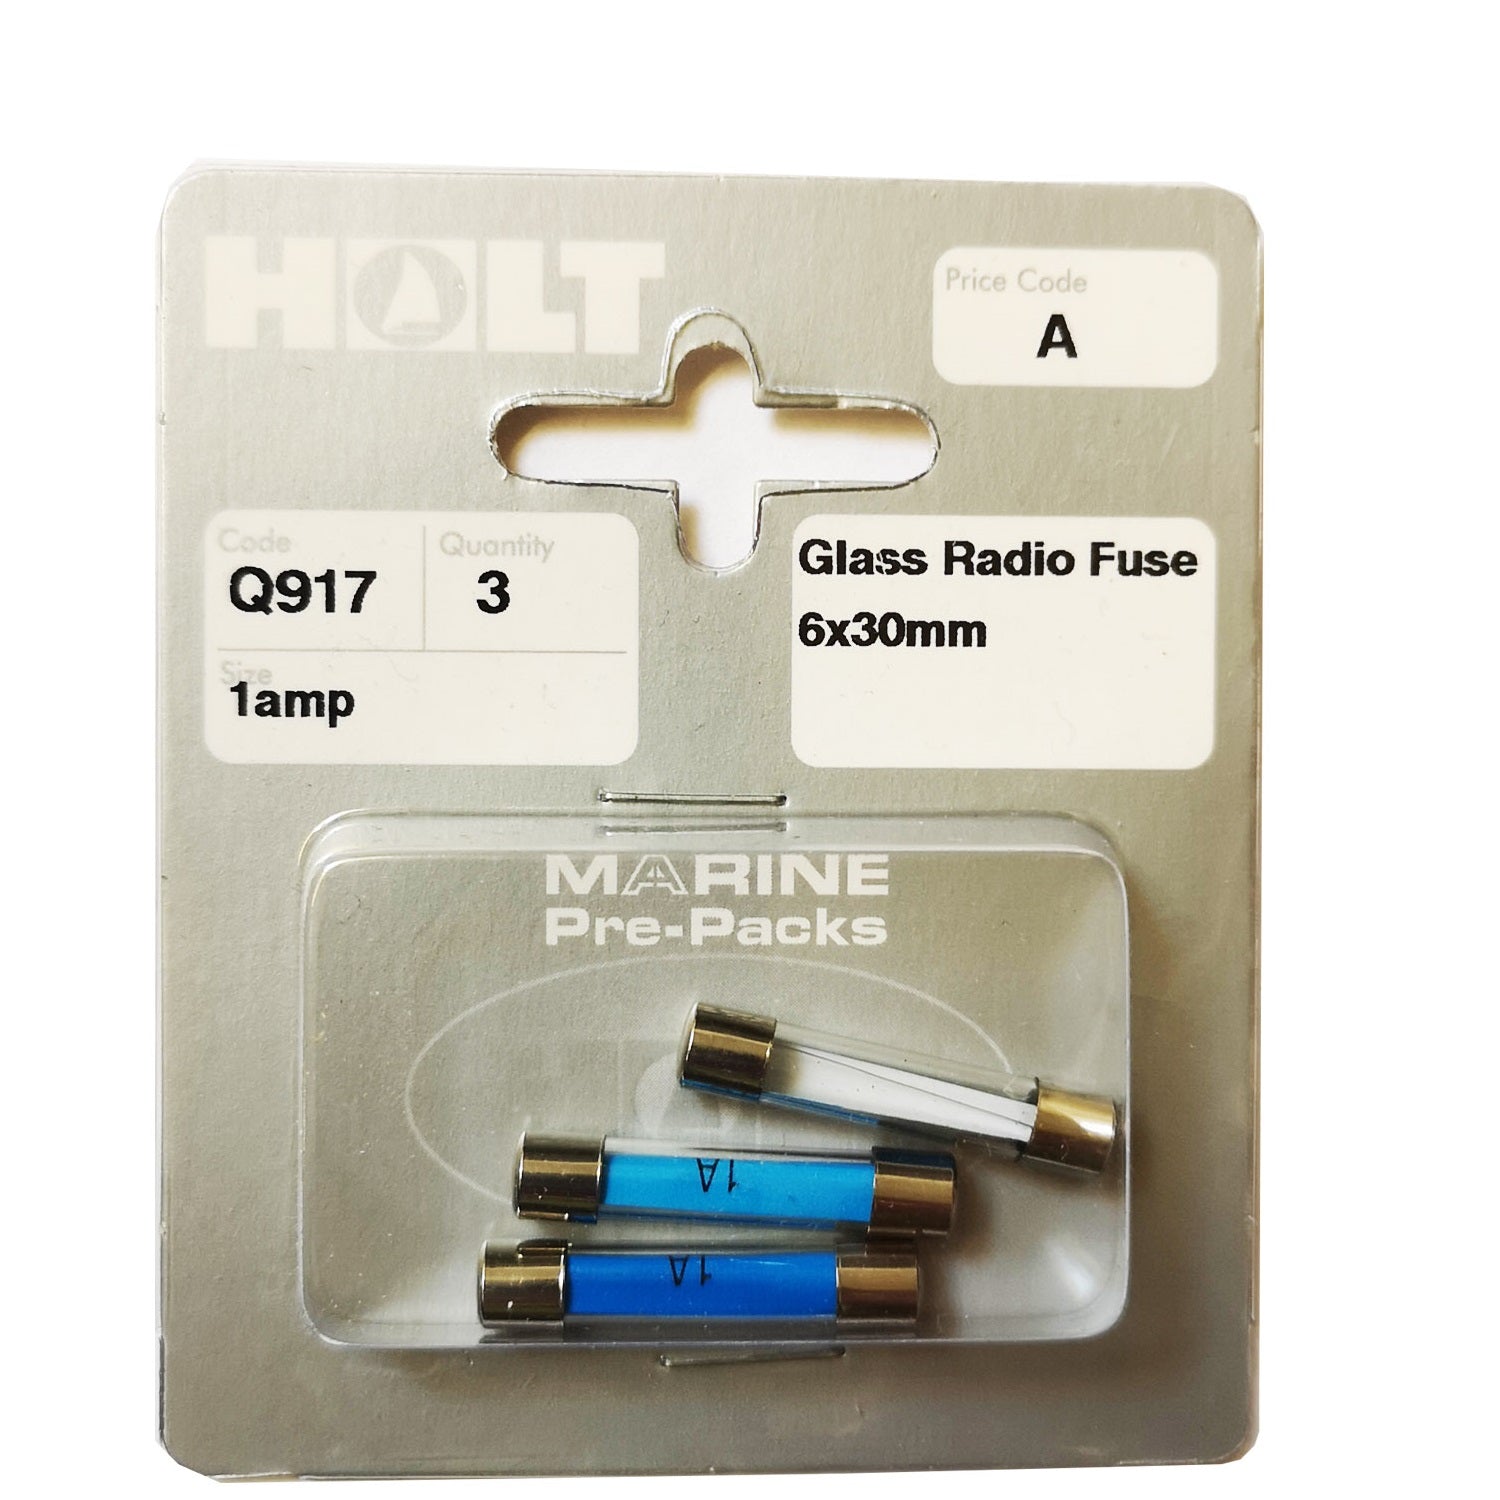 Holt Marine Q917 Glass Radio Fuse Pkt3 - 1amp - Premium Fuses from Holt Marine - Just $1.99! Shop now at W Hurst & Son (IW) Ltd